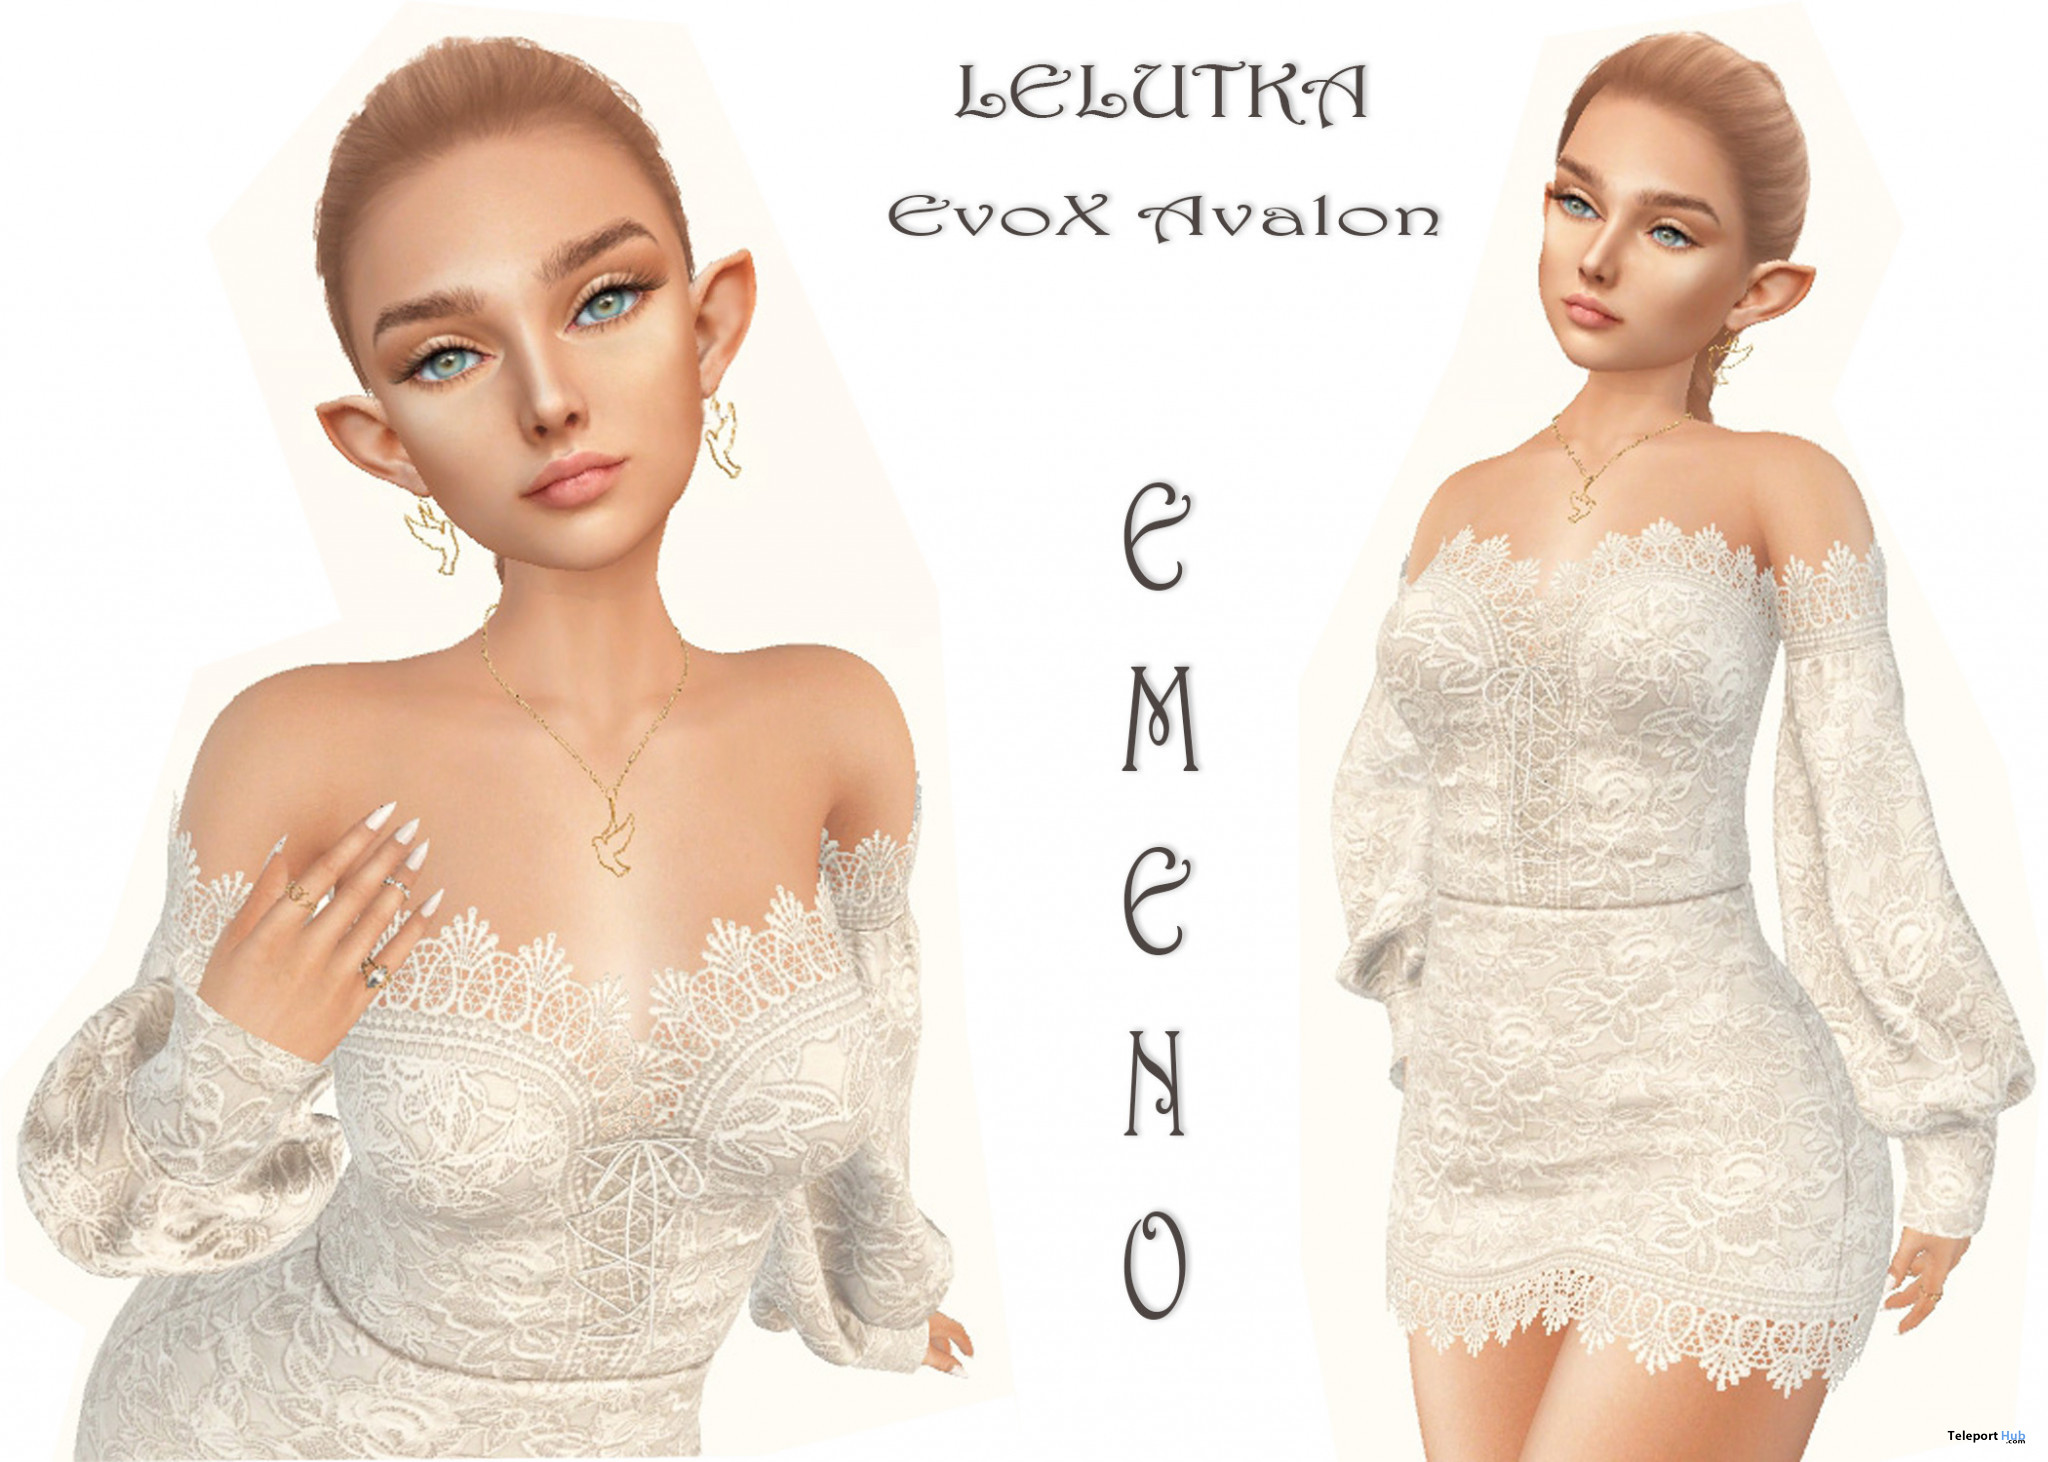 Shape for Lelutka Head EvoX Avalon 7L Promo by Emeno - Teleport Hub - teleporthub.com